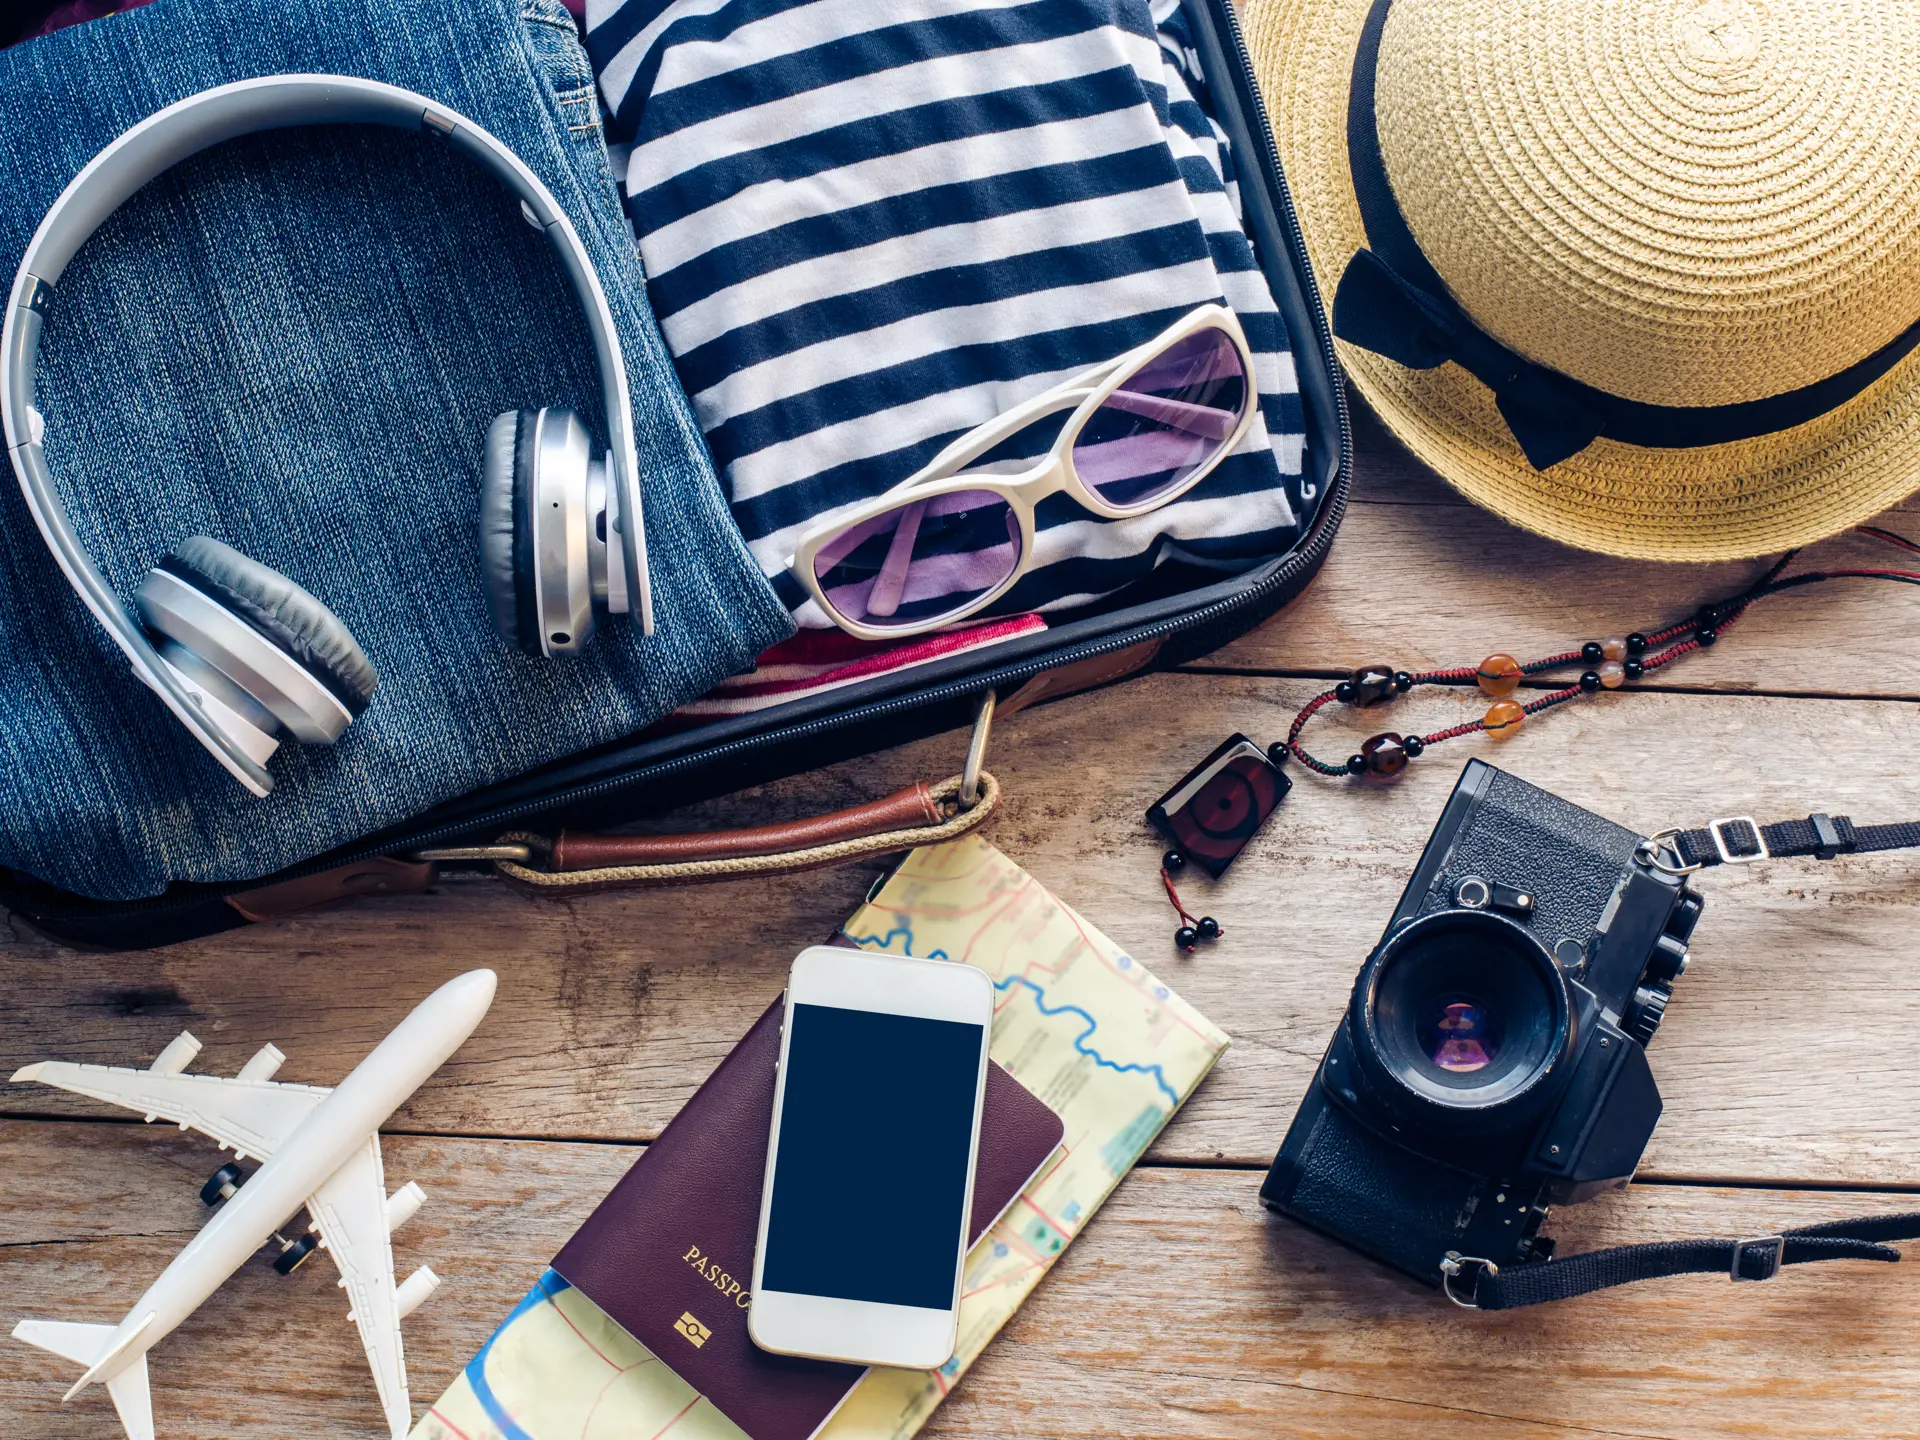 shutterstock_374838787 Clothing traveler's Passport, wallet, glasses, smart phone devices, on a wooden floor..jpg